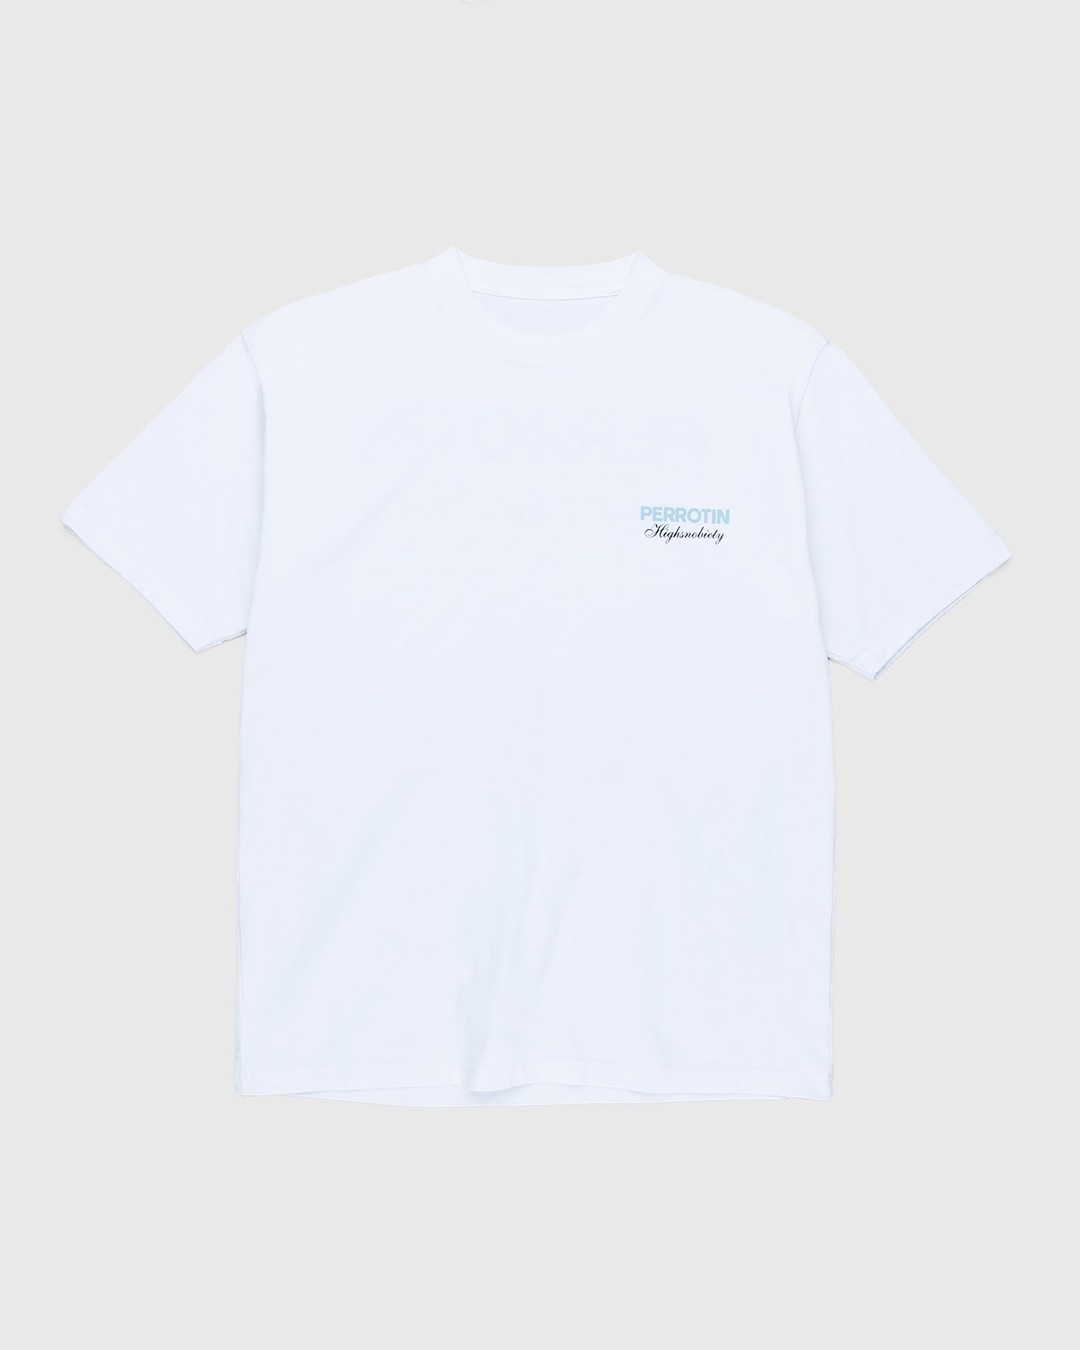 Highsnobiety – Not In Paris 3 x Galerie Perrotin T-Shirt White - T-shirts - White - Image 2